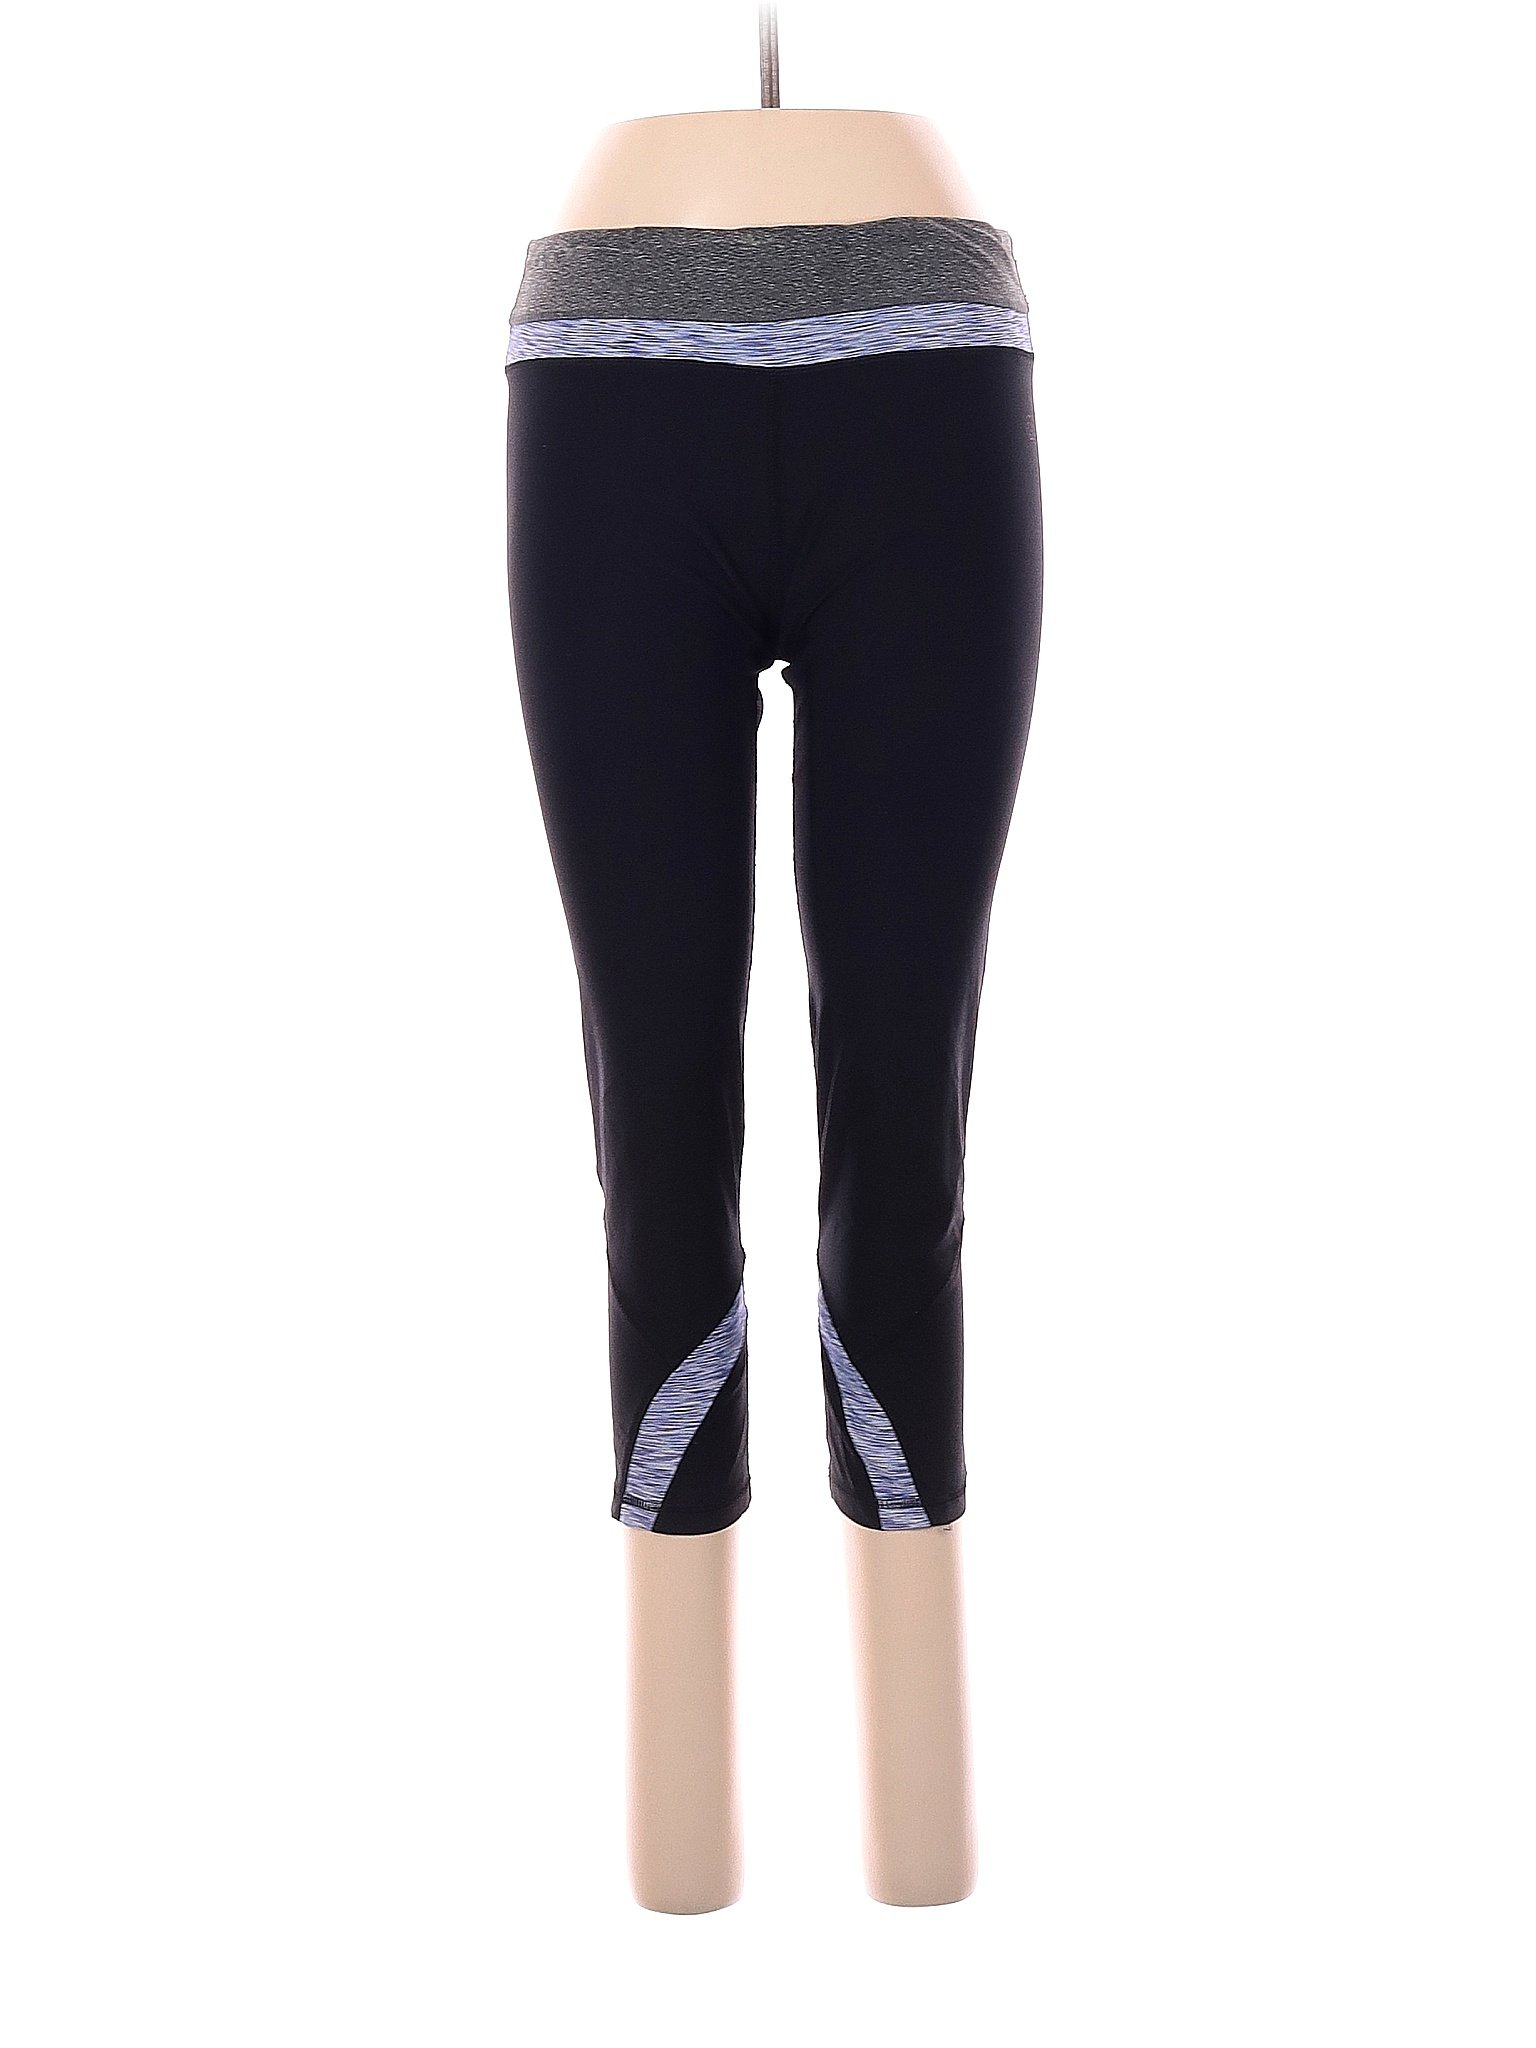 VOGO Athletica Black Yoga Pants Size M - 89% off